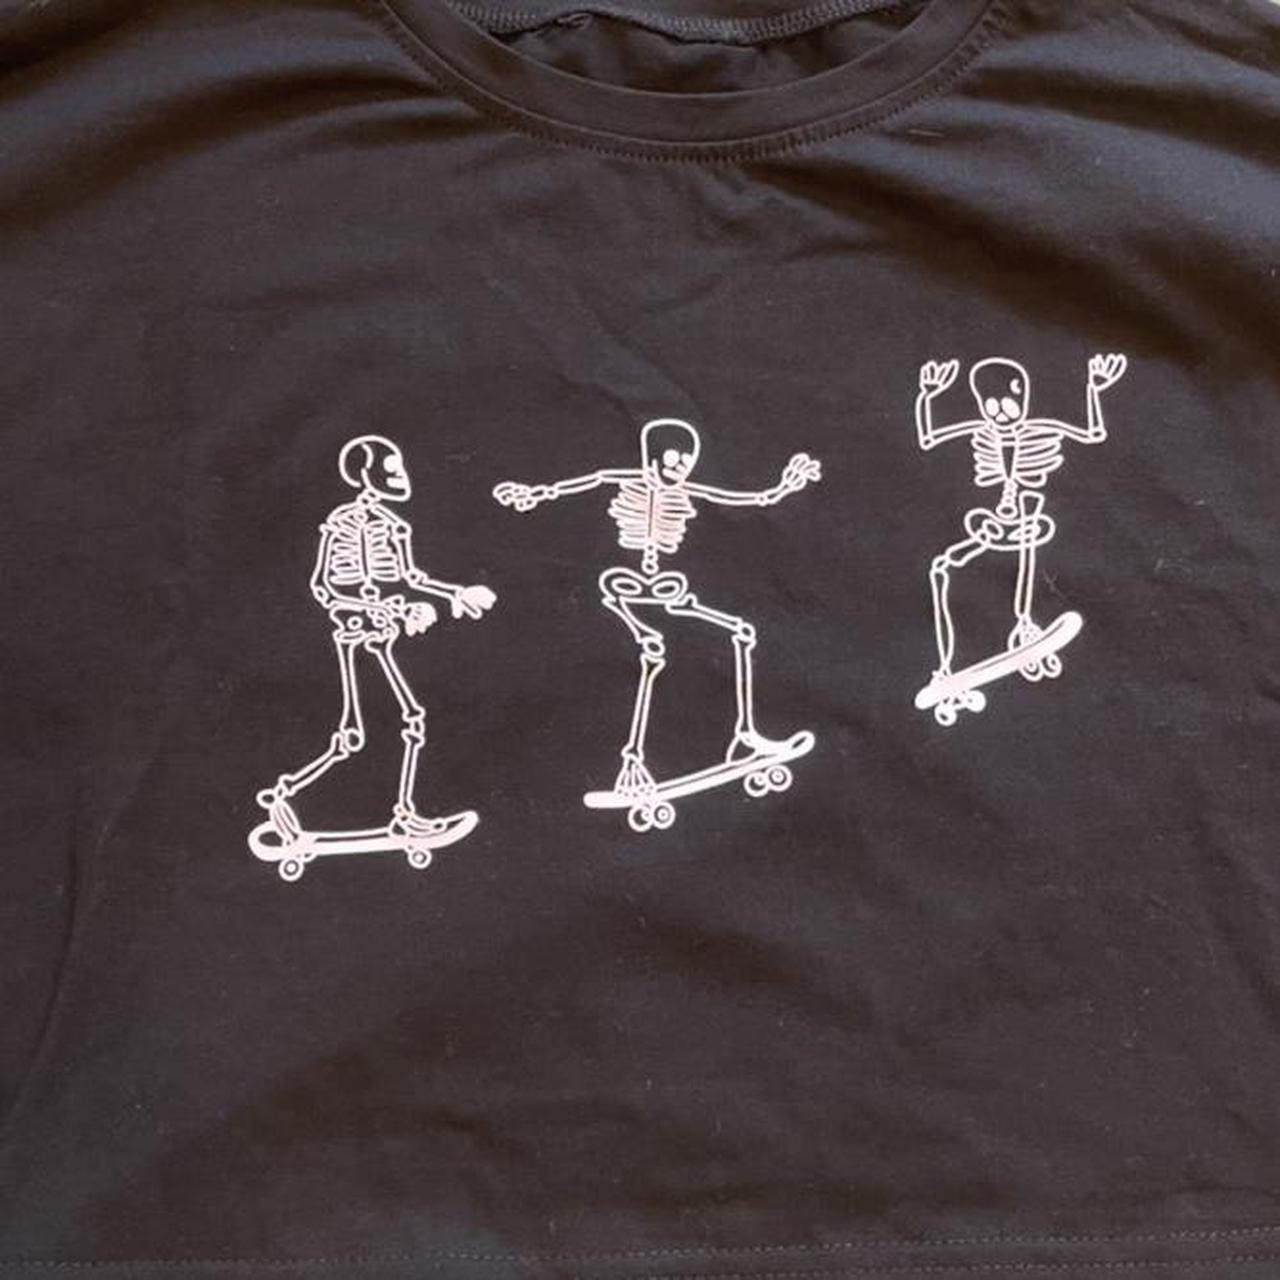 Product Image 2 - Skate boarding skeletons crop top
Size